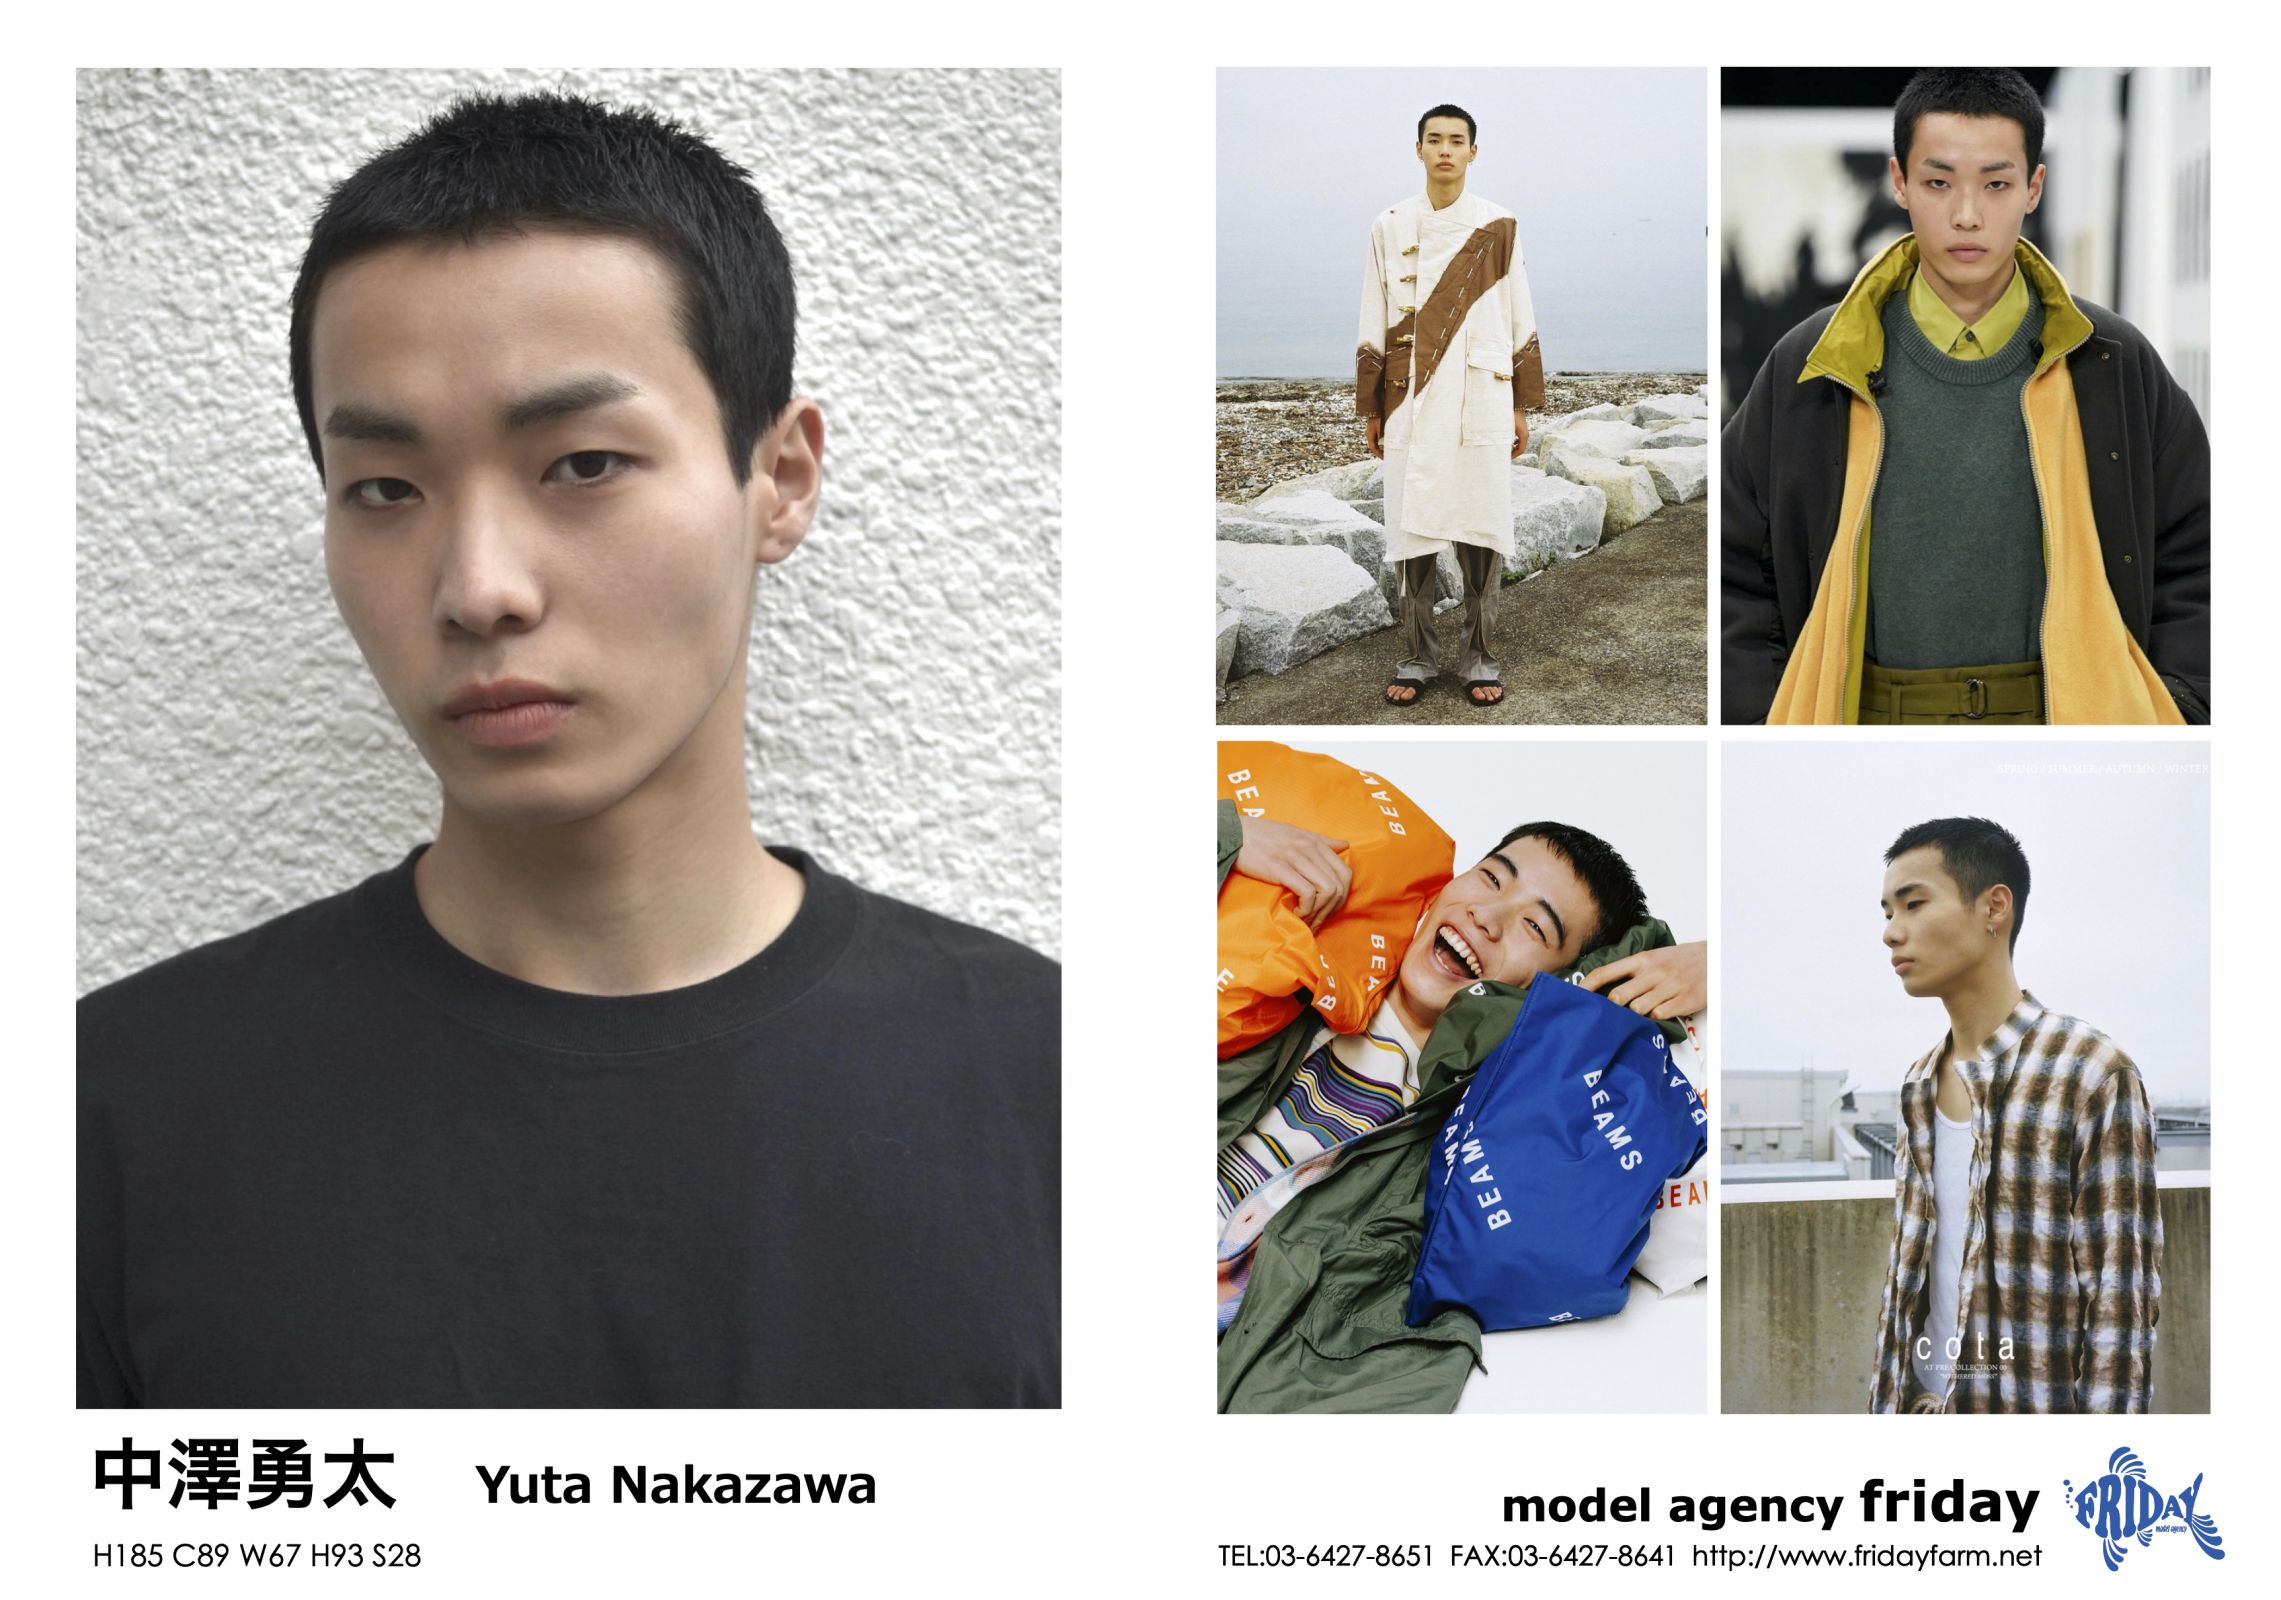 中澤 勇太 - Yuta Nakazawa | model agency friday